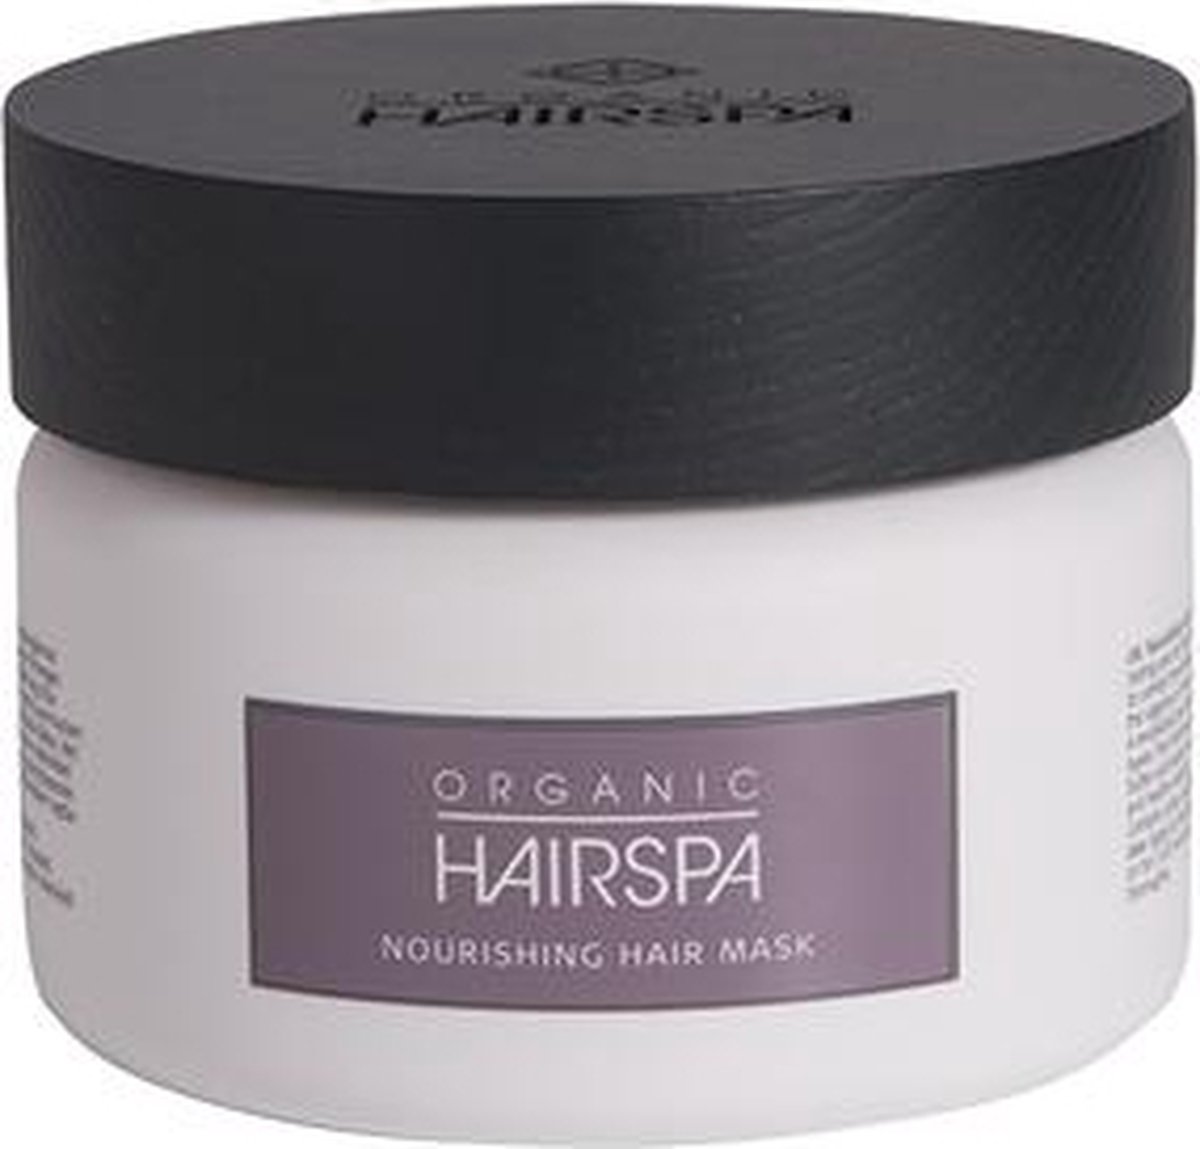 Nourishing Hair Mask 250ml - Organic Hairspa